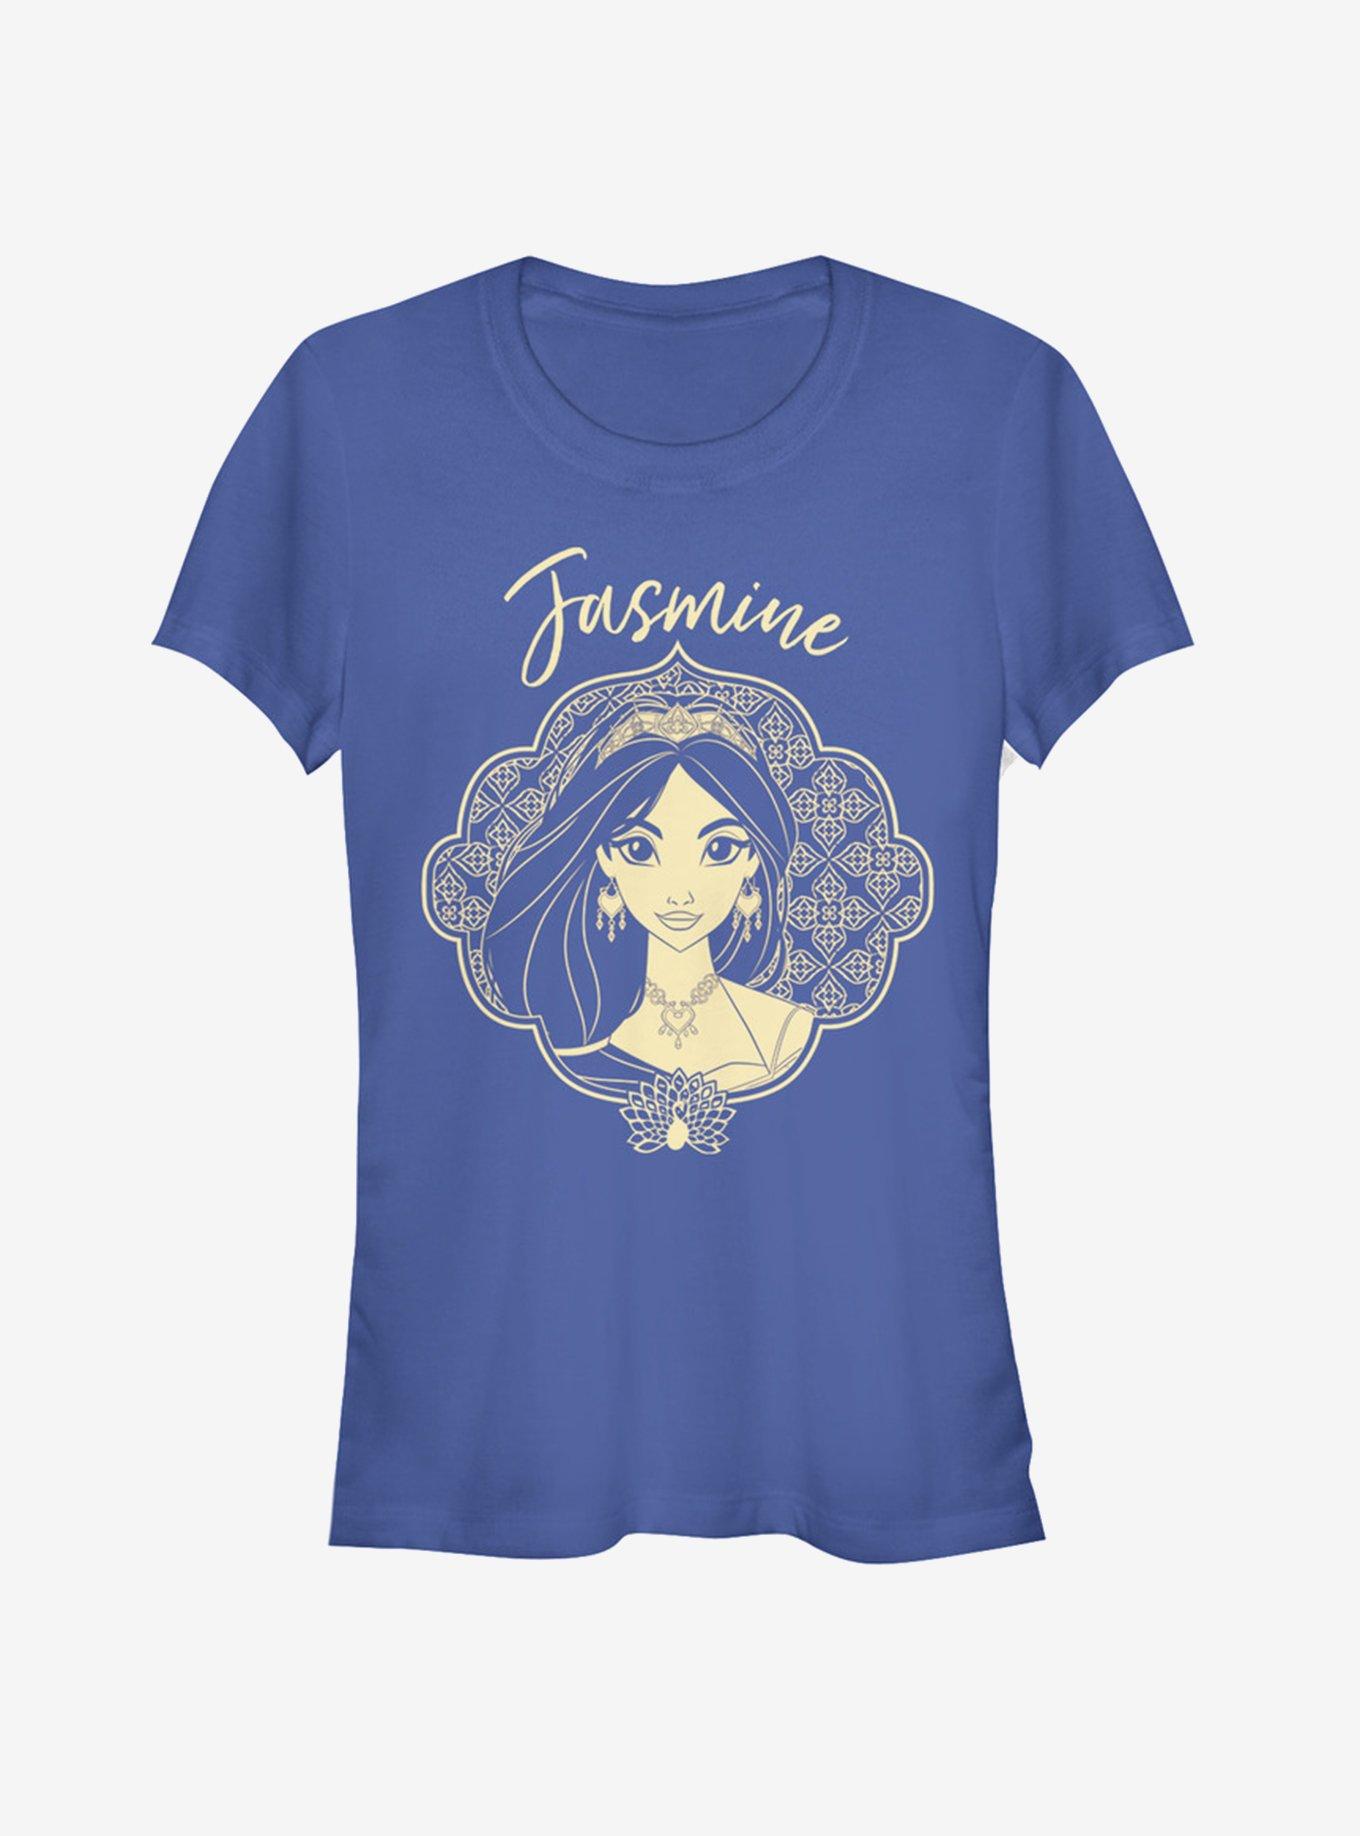 Disney Aladdin 2019 Jasmine Portrait Girls T-Shirt, , hi-res